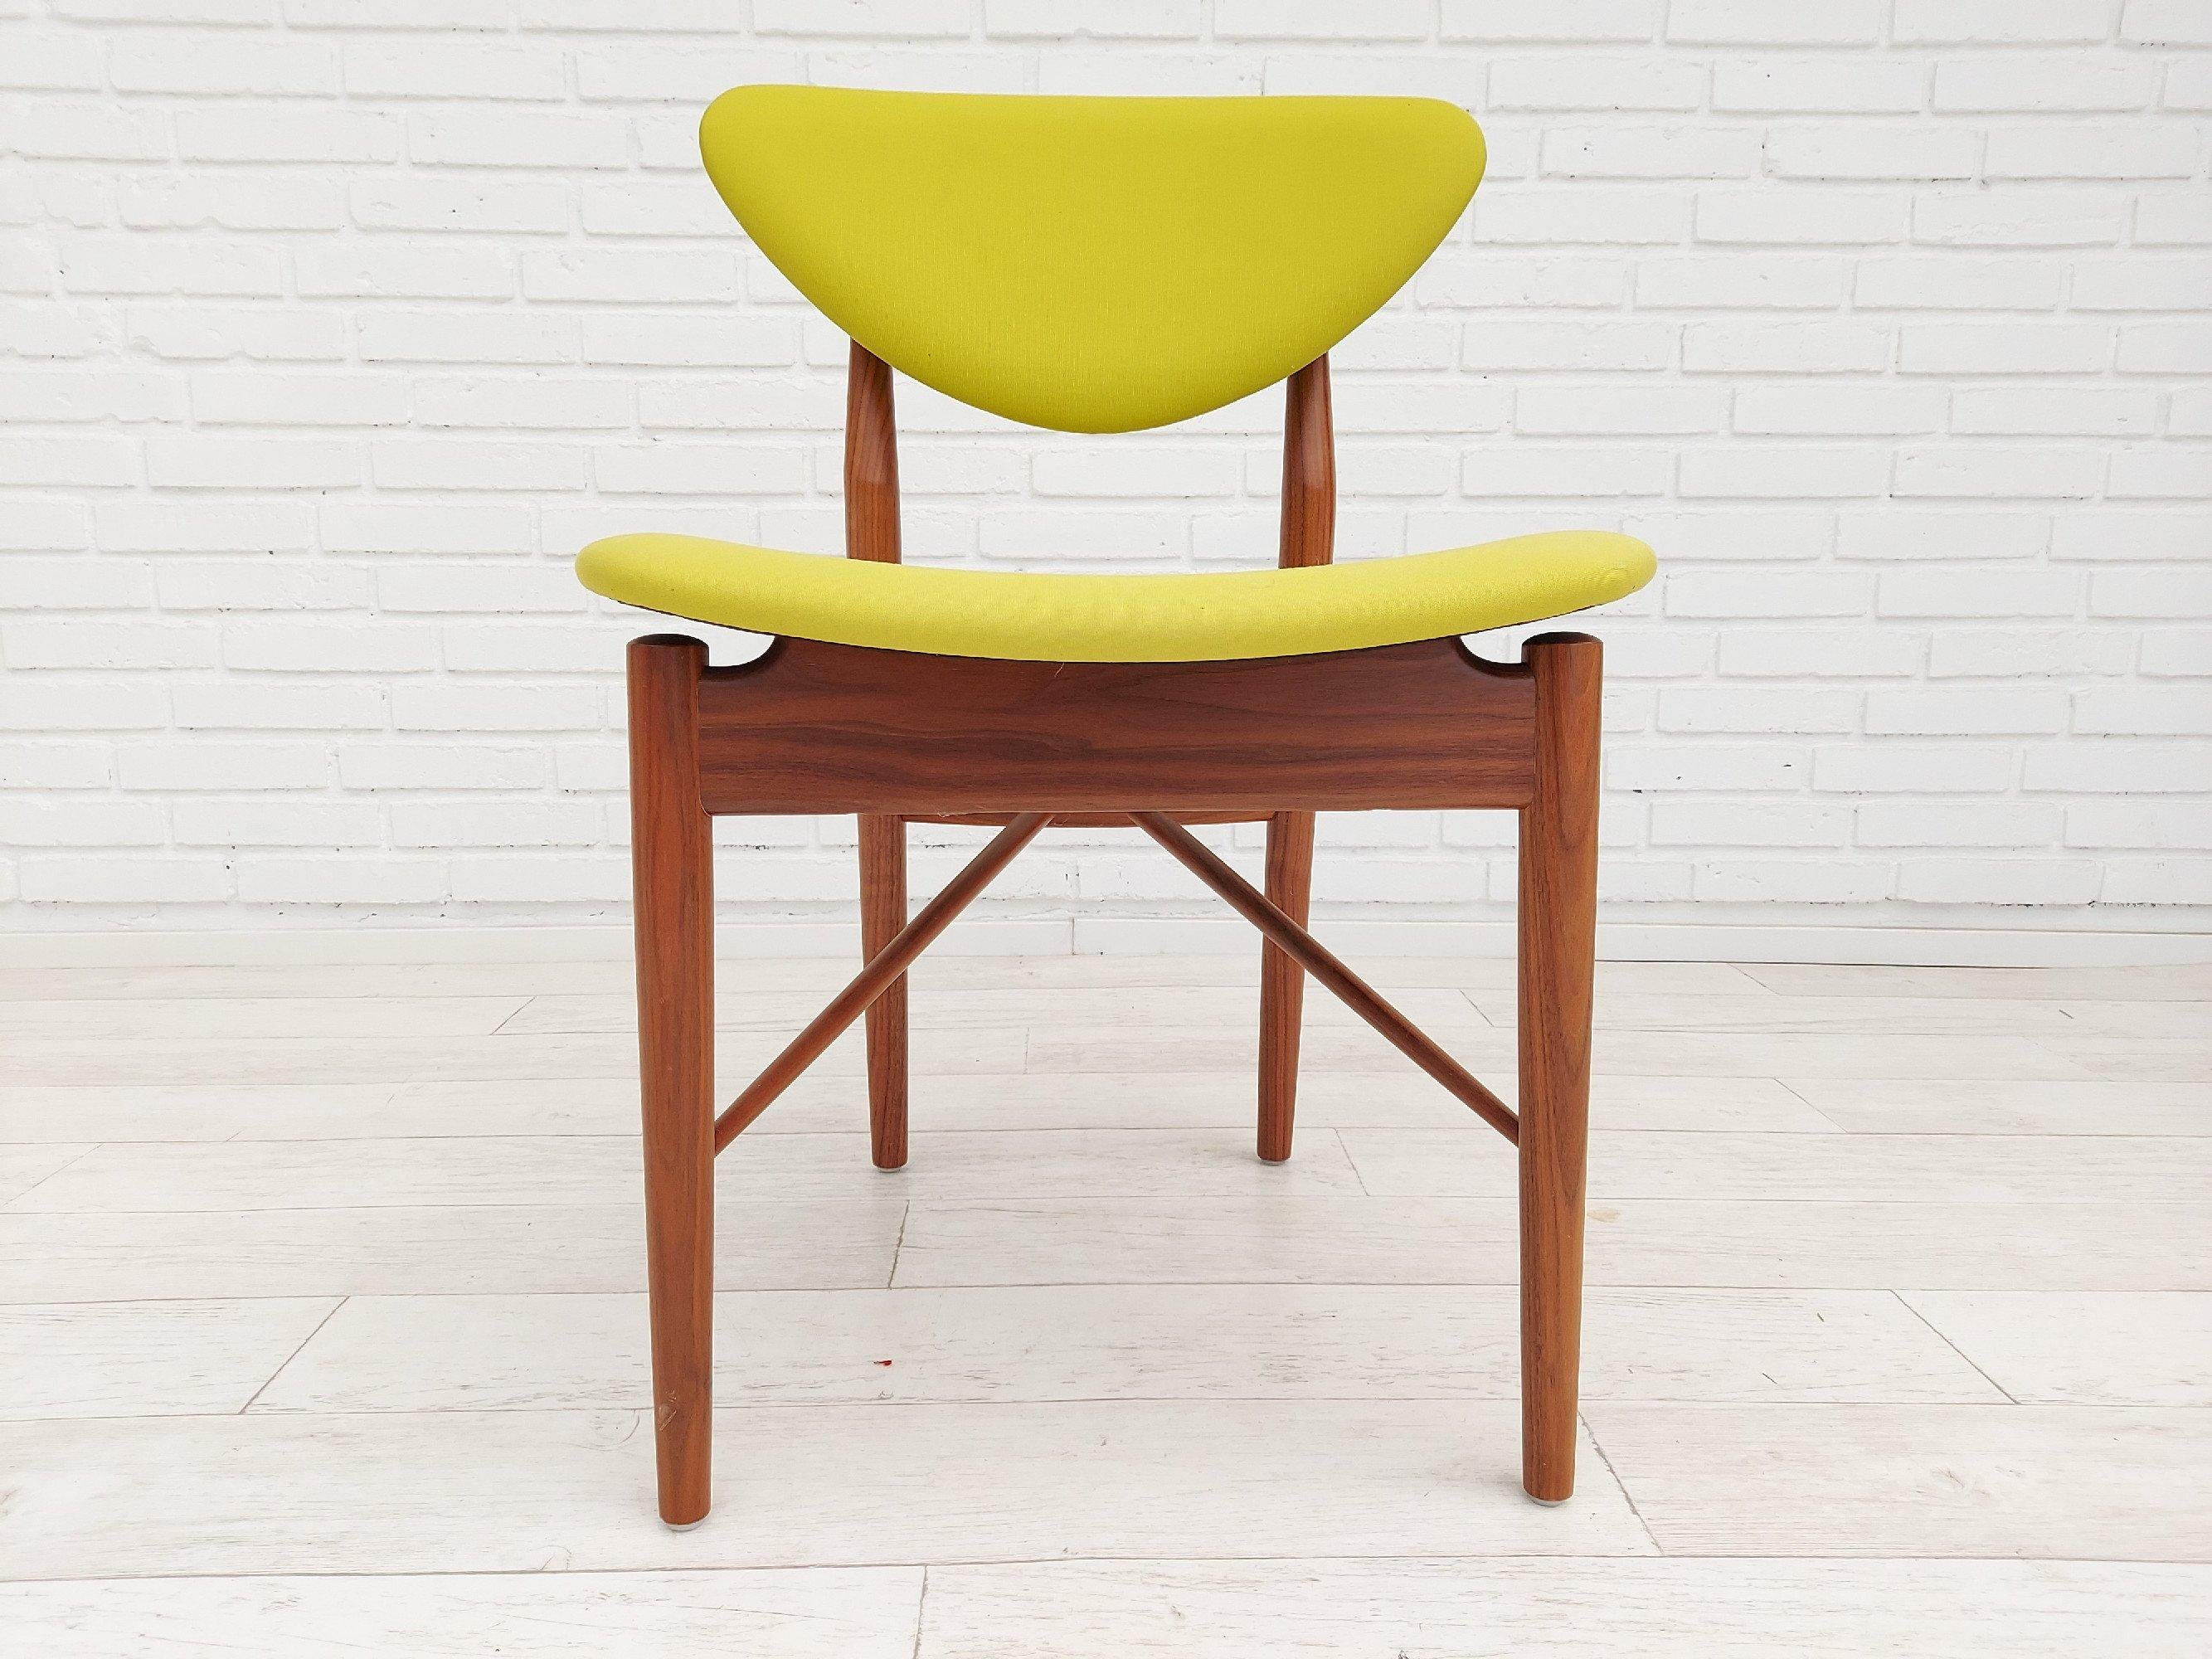 Contemporary Danish Design by Finn Juhl, Chair Model 108, Walnut Wood